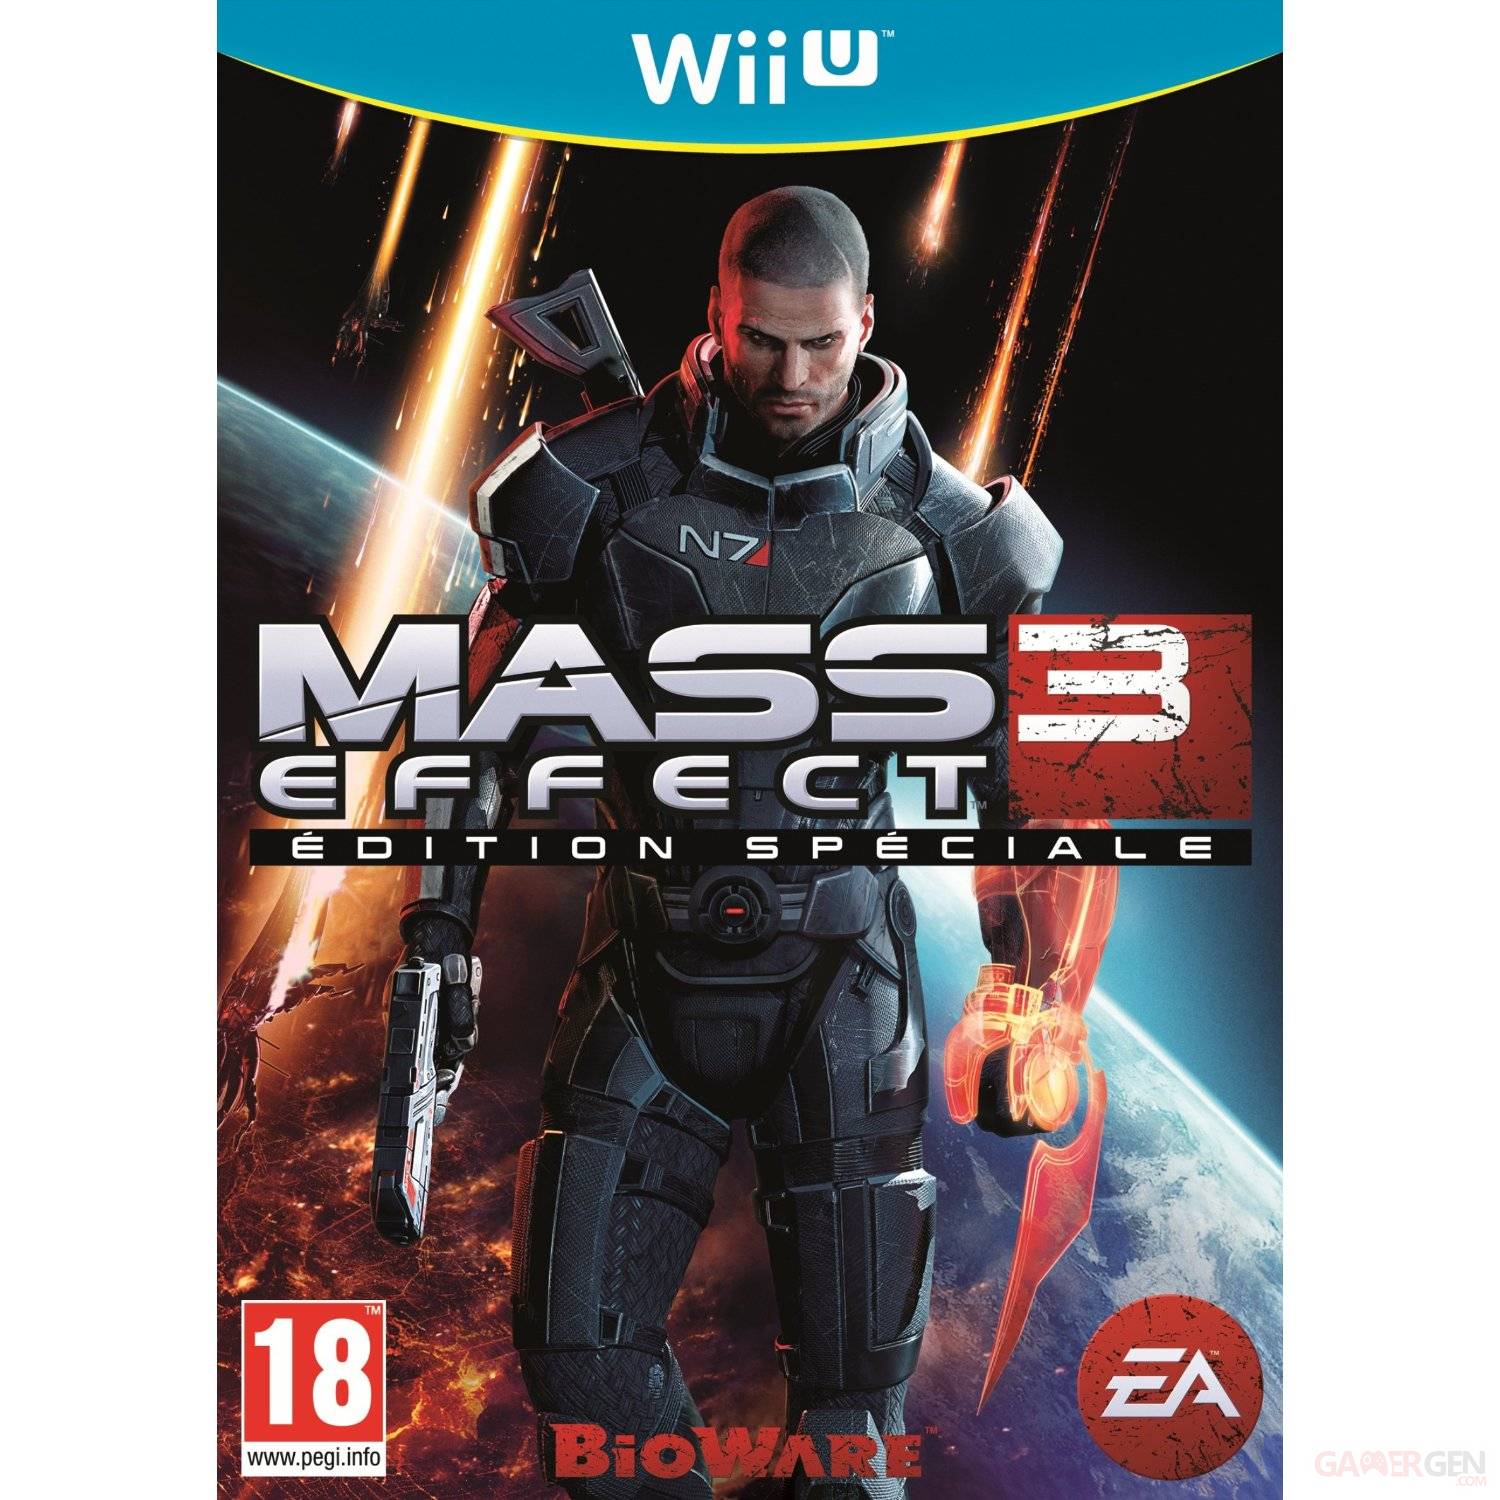 Test de Mass Effect 3 Edition Spéciale sur Wii U - NintendoLeSite